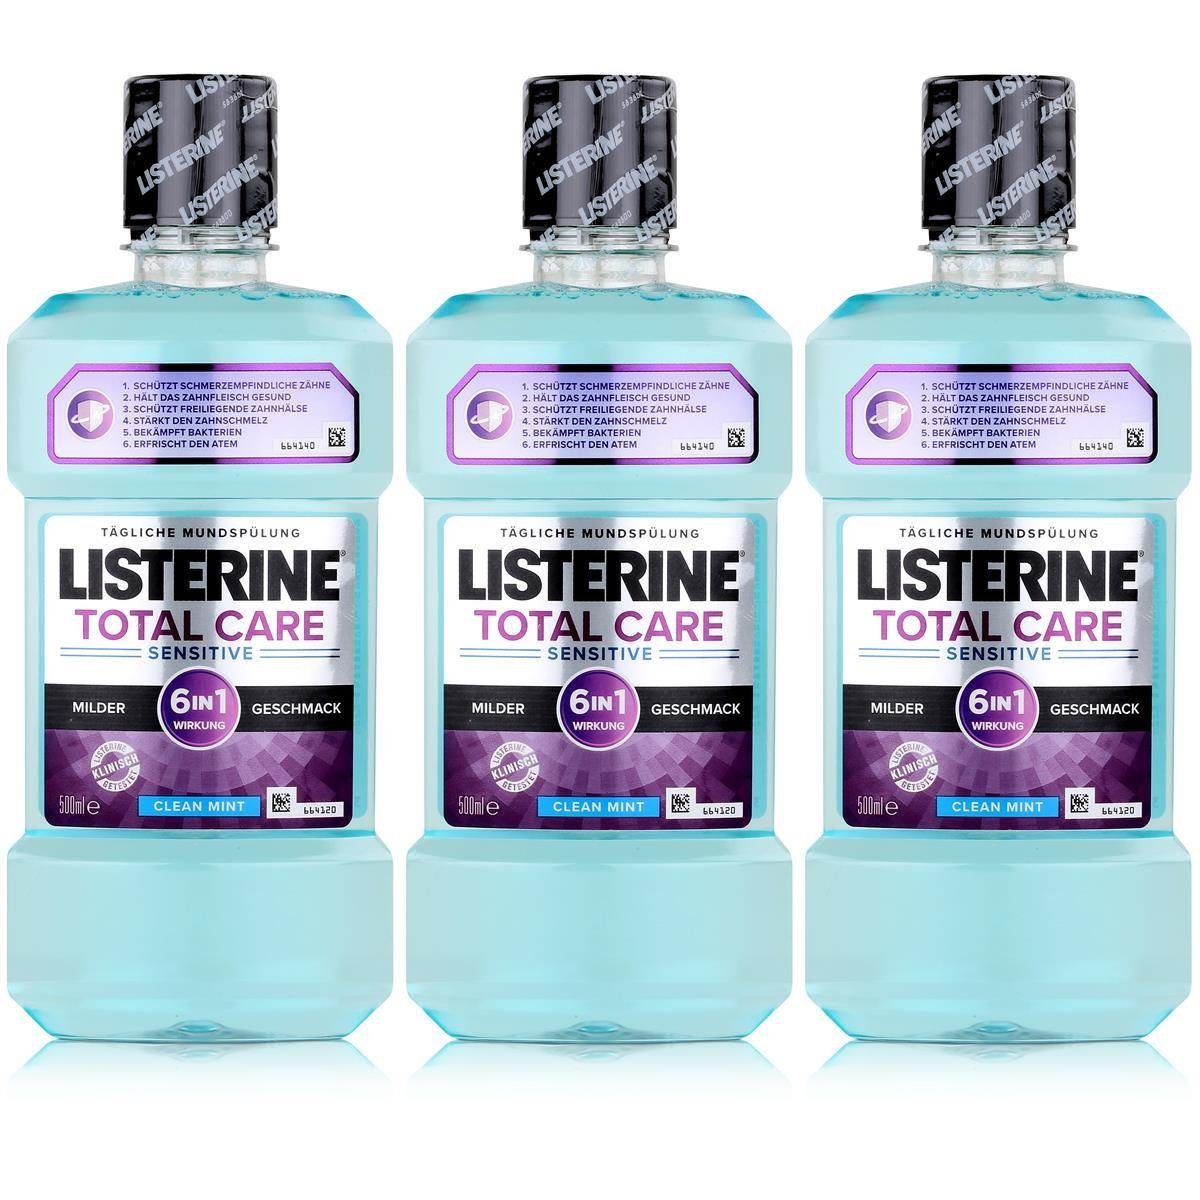 Listerine Mundspülung, »Listerine Total Care Sensitive 500ml - Hält ihren  Atem frisch (3er Pack)«